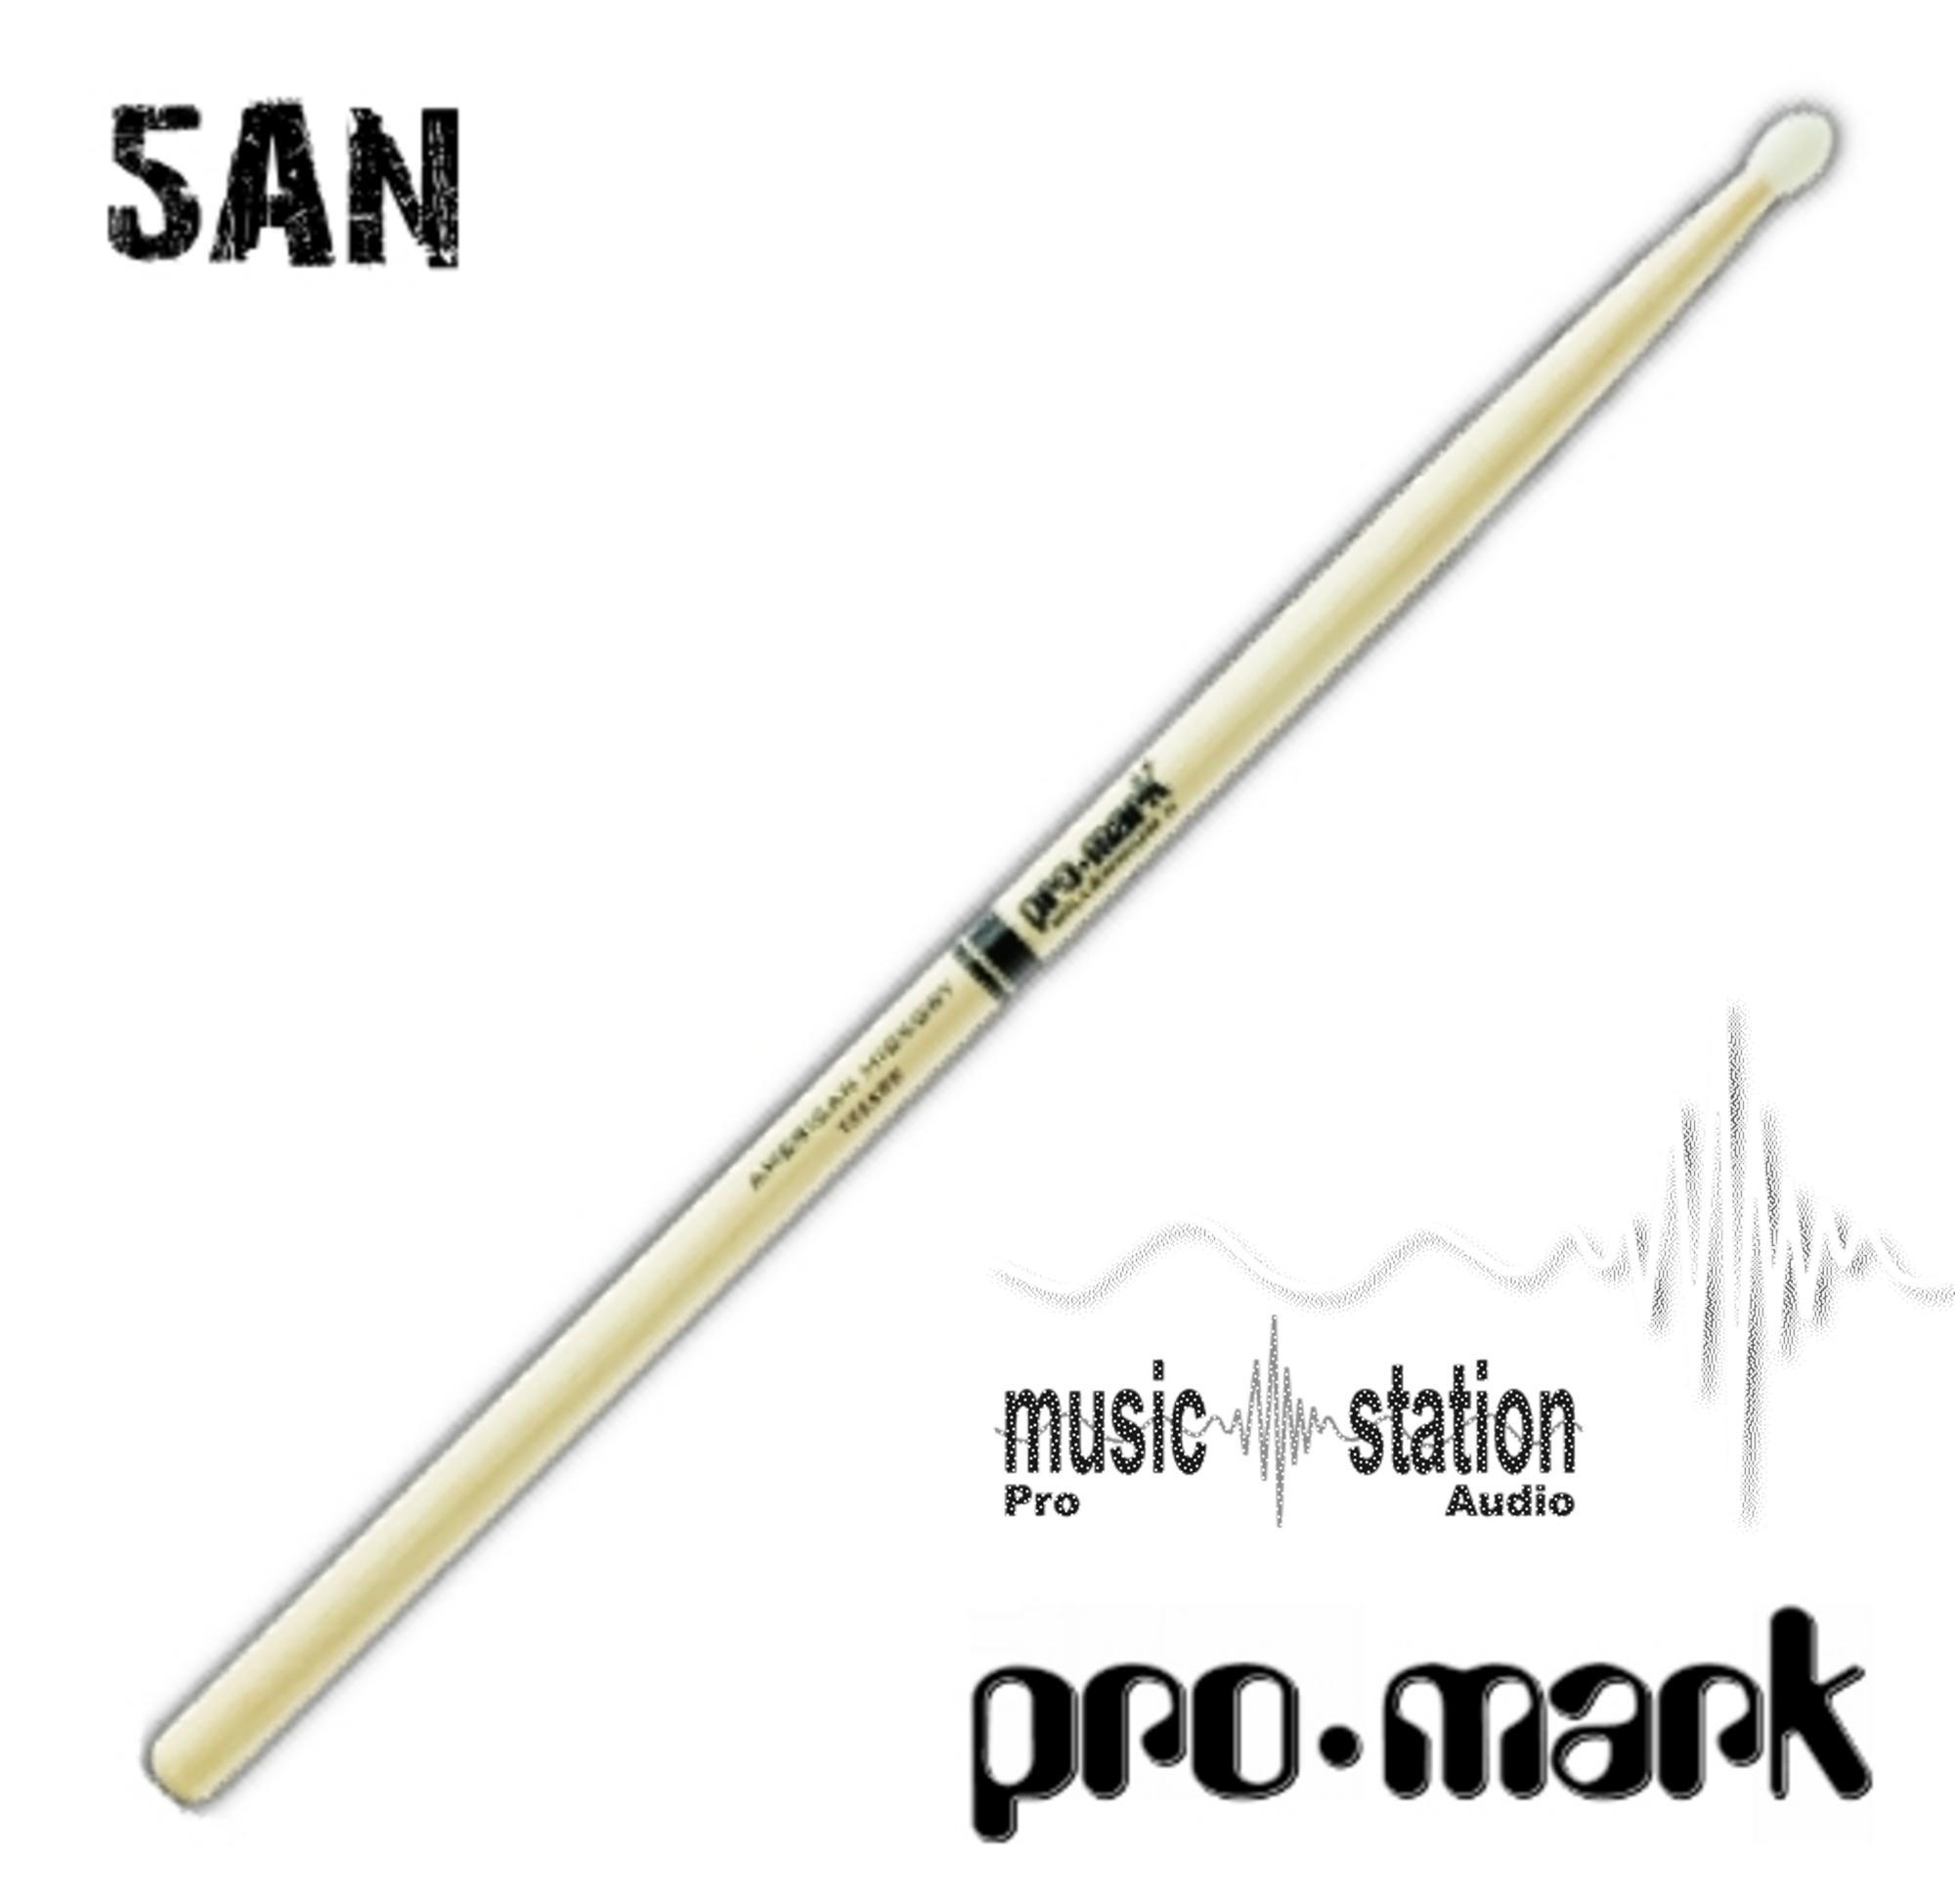 Promark Sticks 5AN Nylon